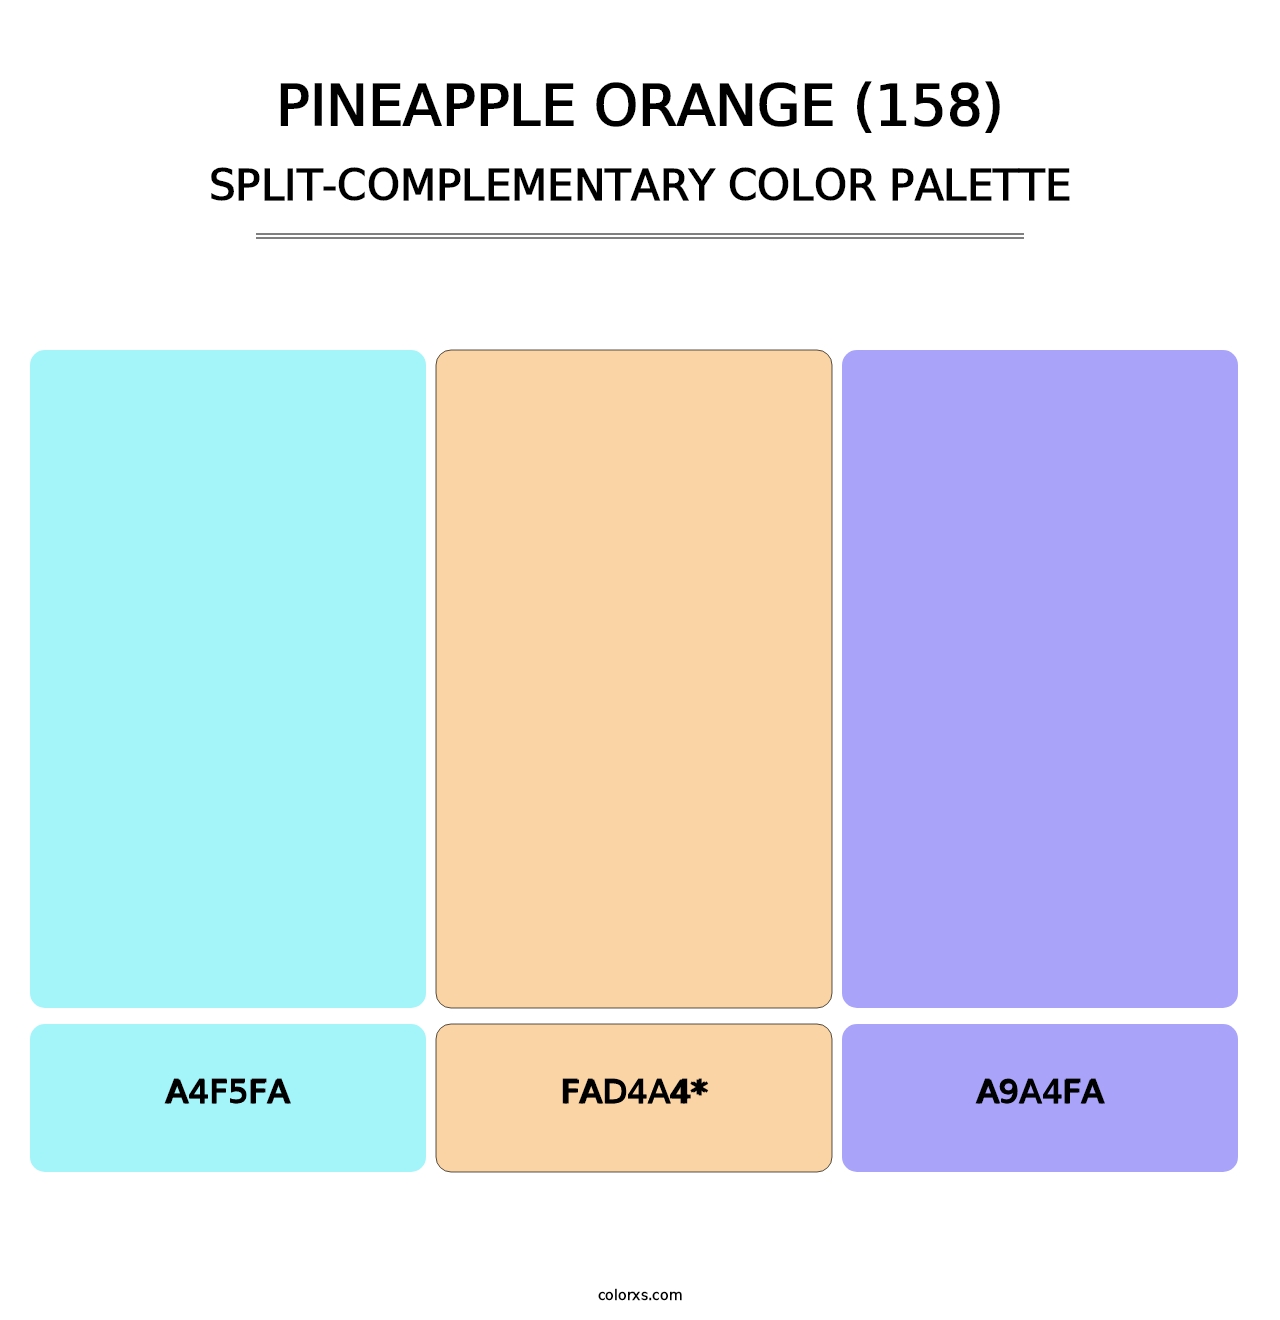 Pineapple Orange (158) - Split-Complementary Color Palette